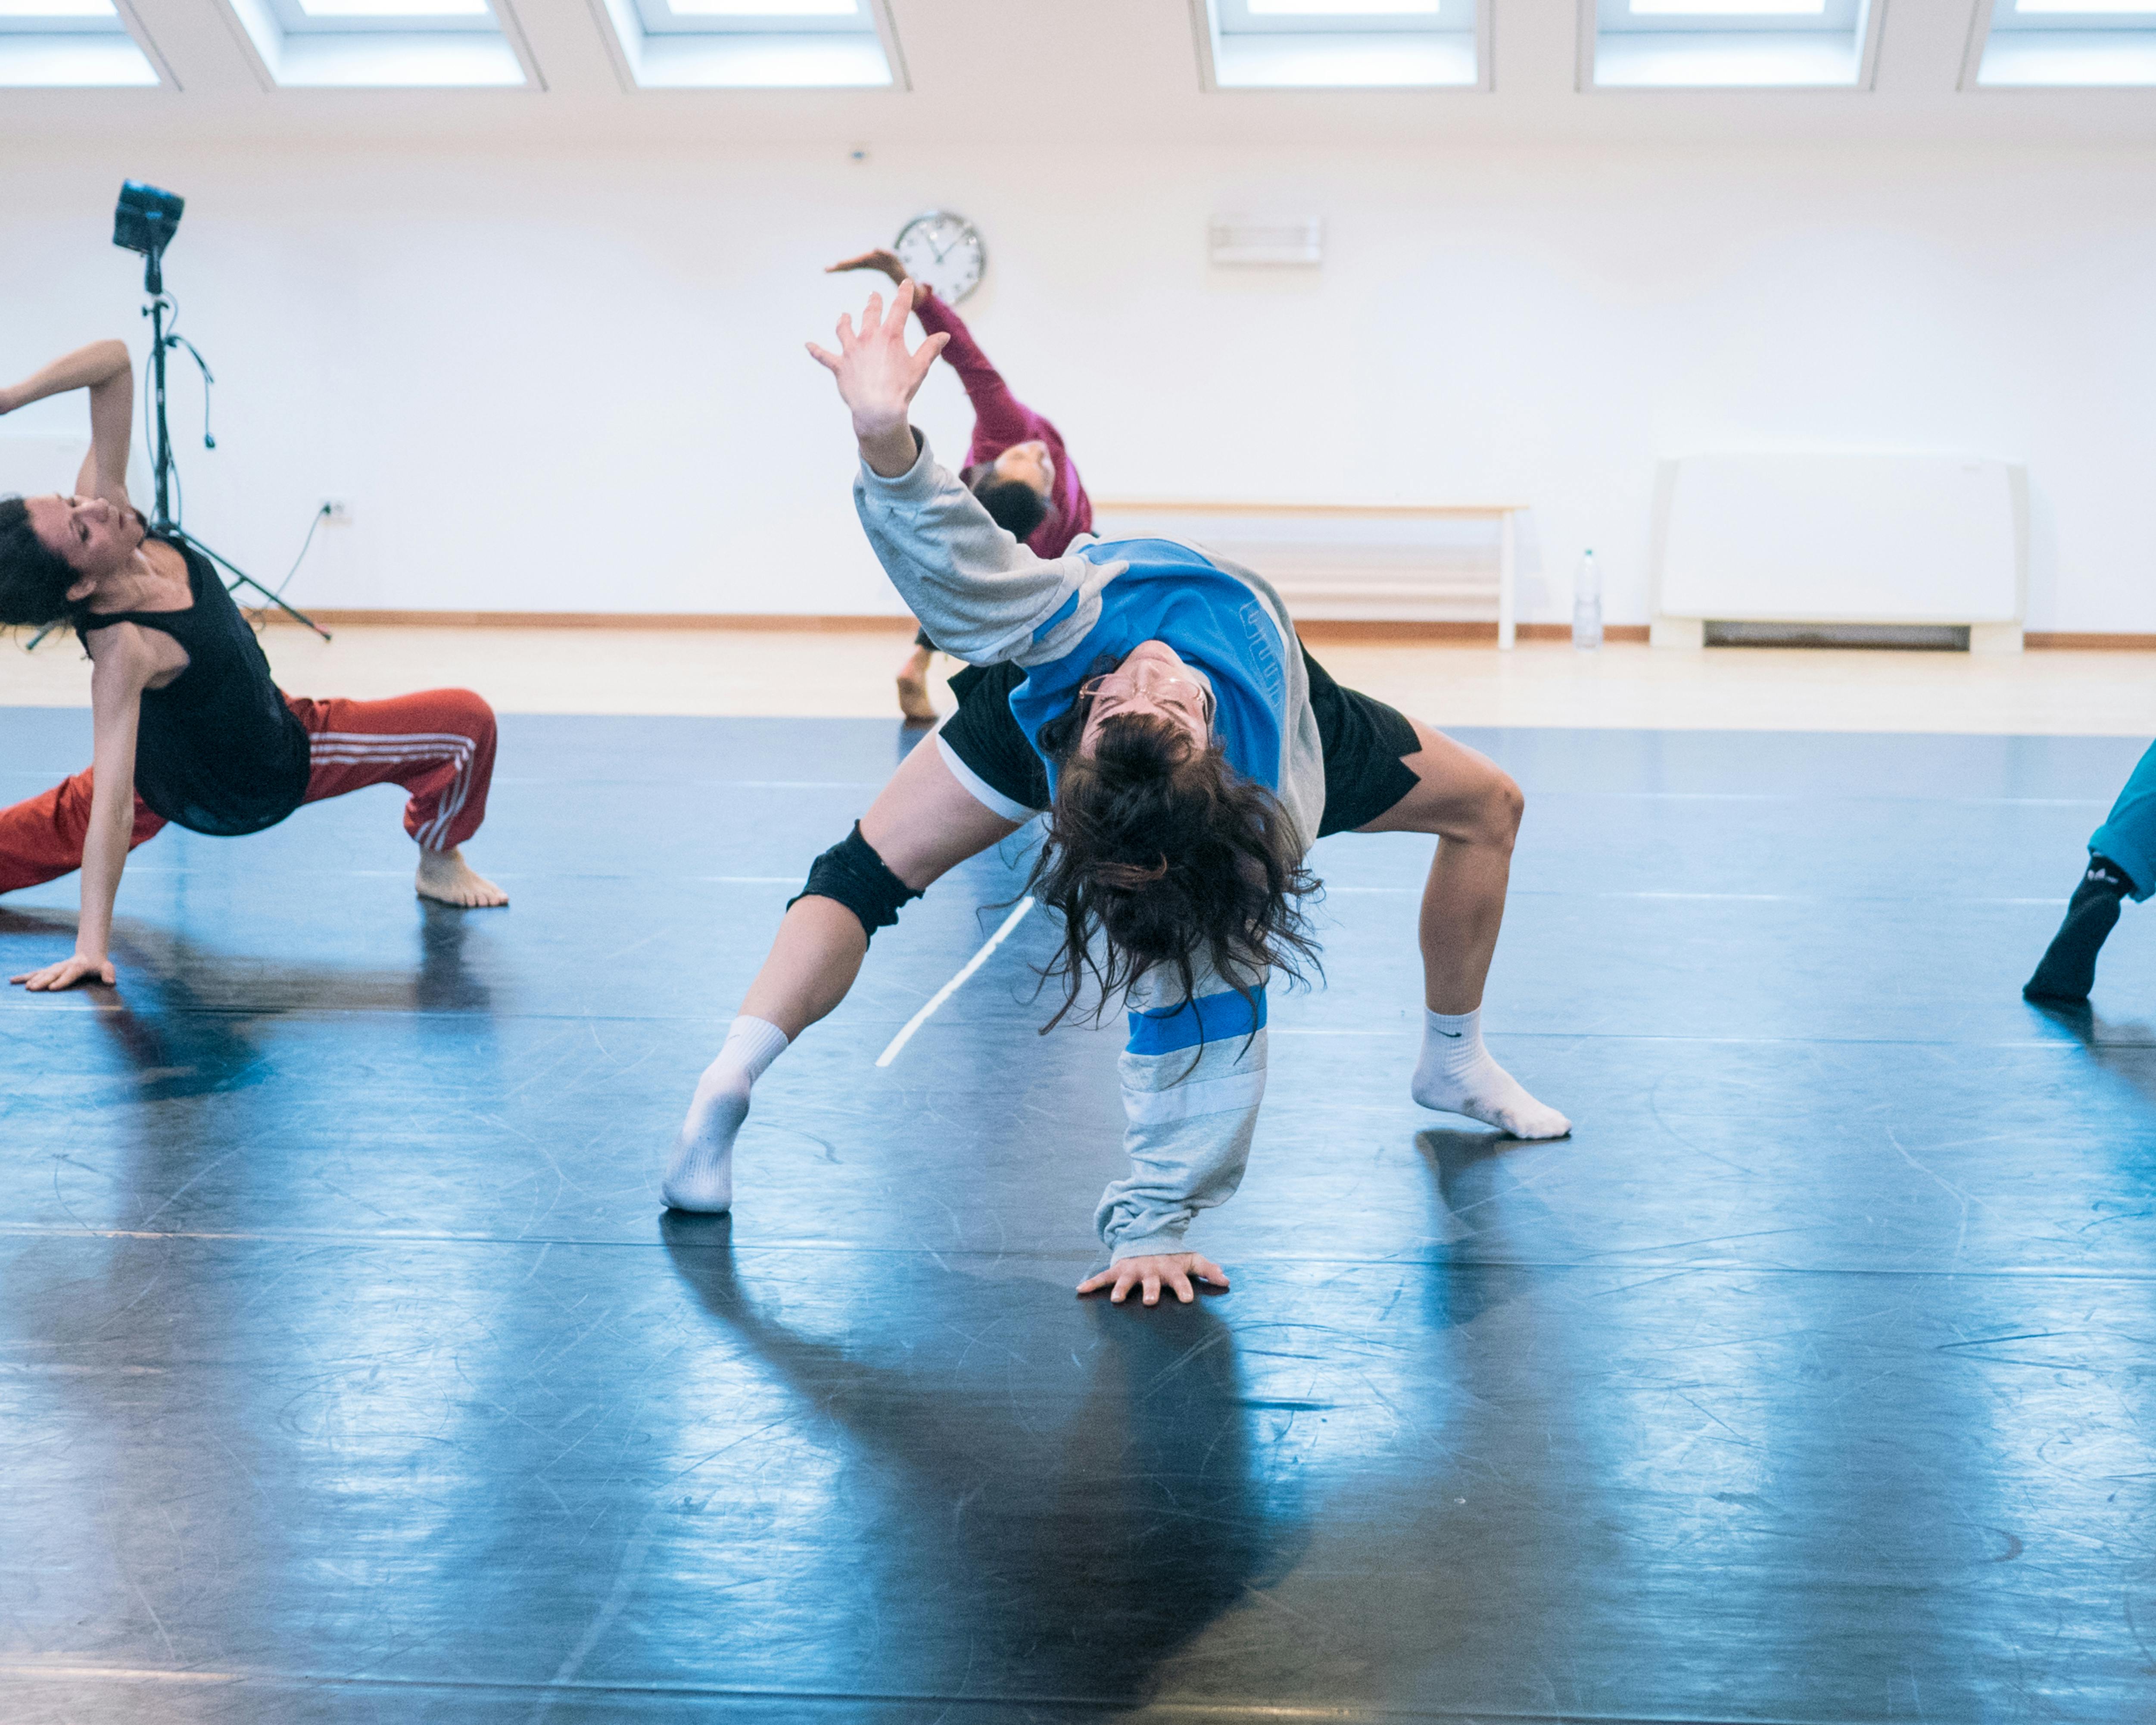 In the dance studio, dancers train